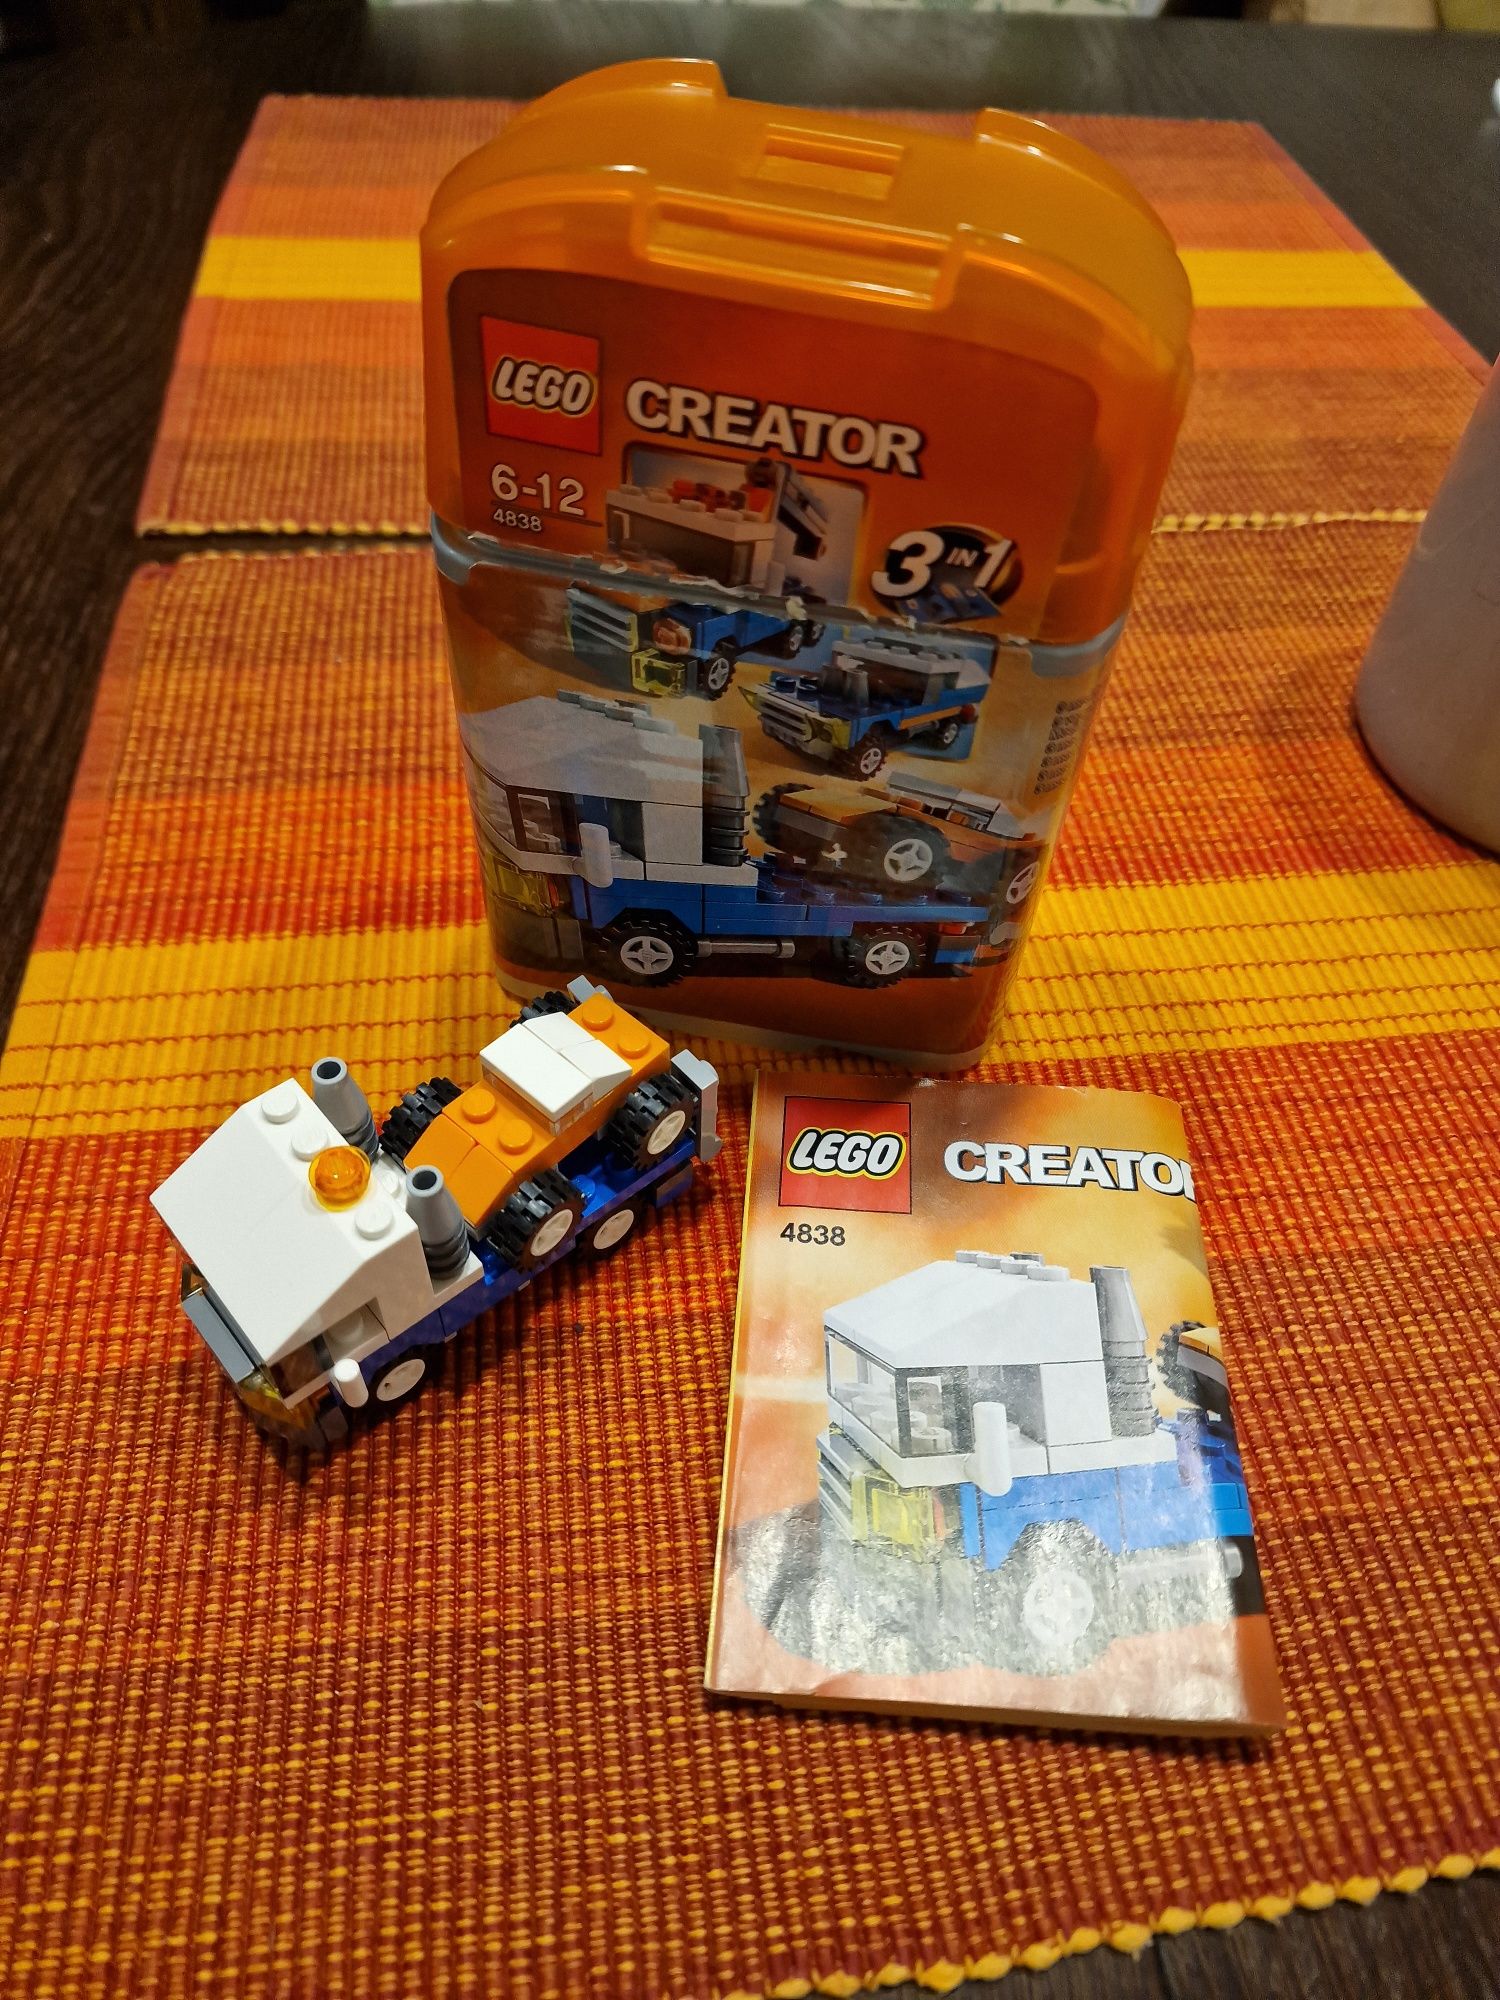 Lego Creator 2008 r. 3 w 1 3 in 1 4838 Mini pojazdy Mini vehicles